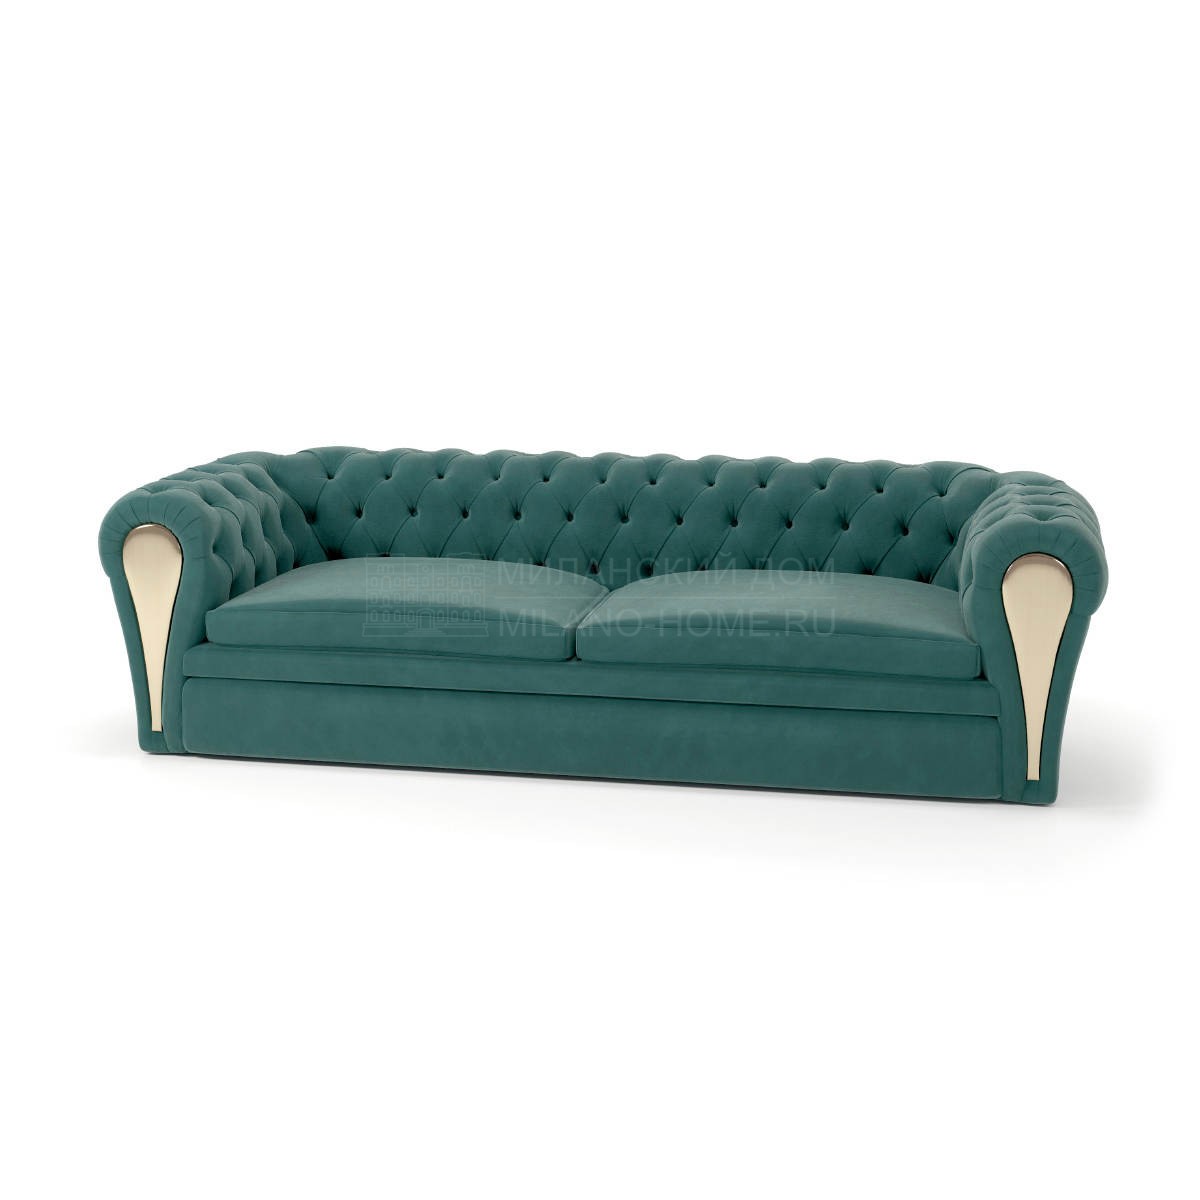 Прямой диван Mayfair sofa из Италии фабрики TURRI